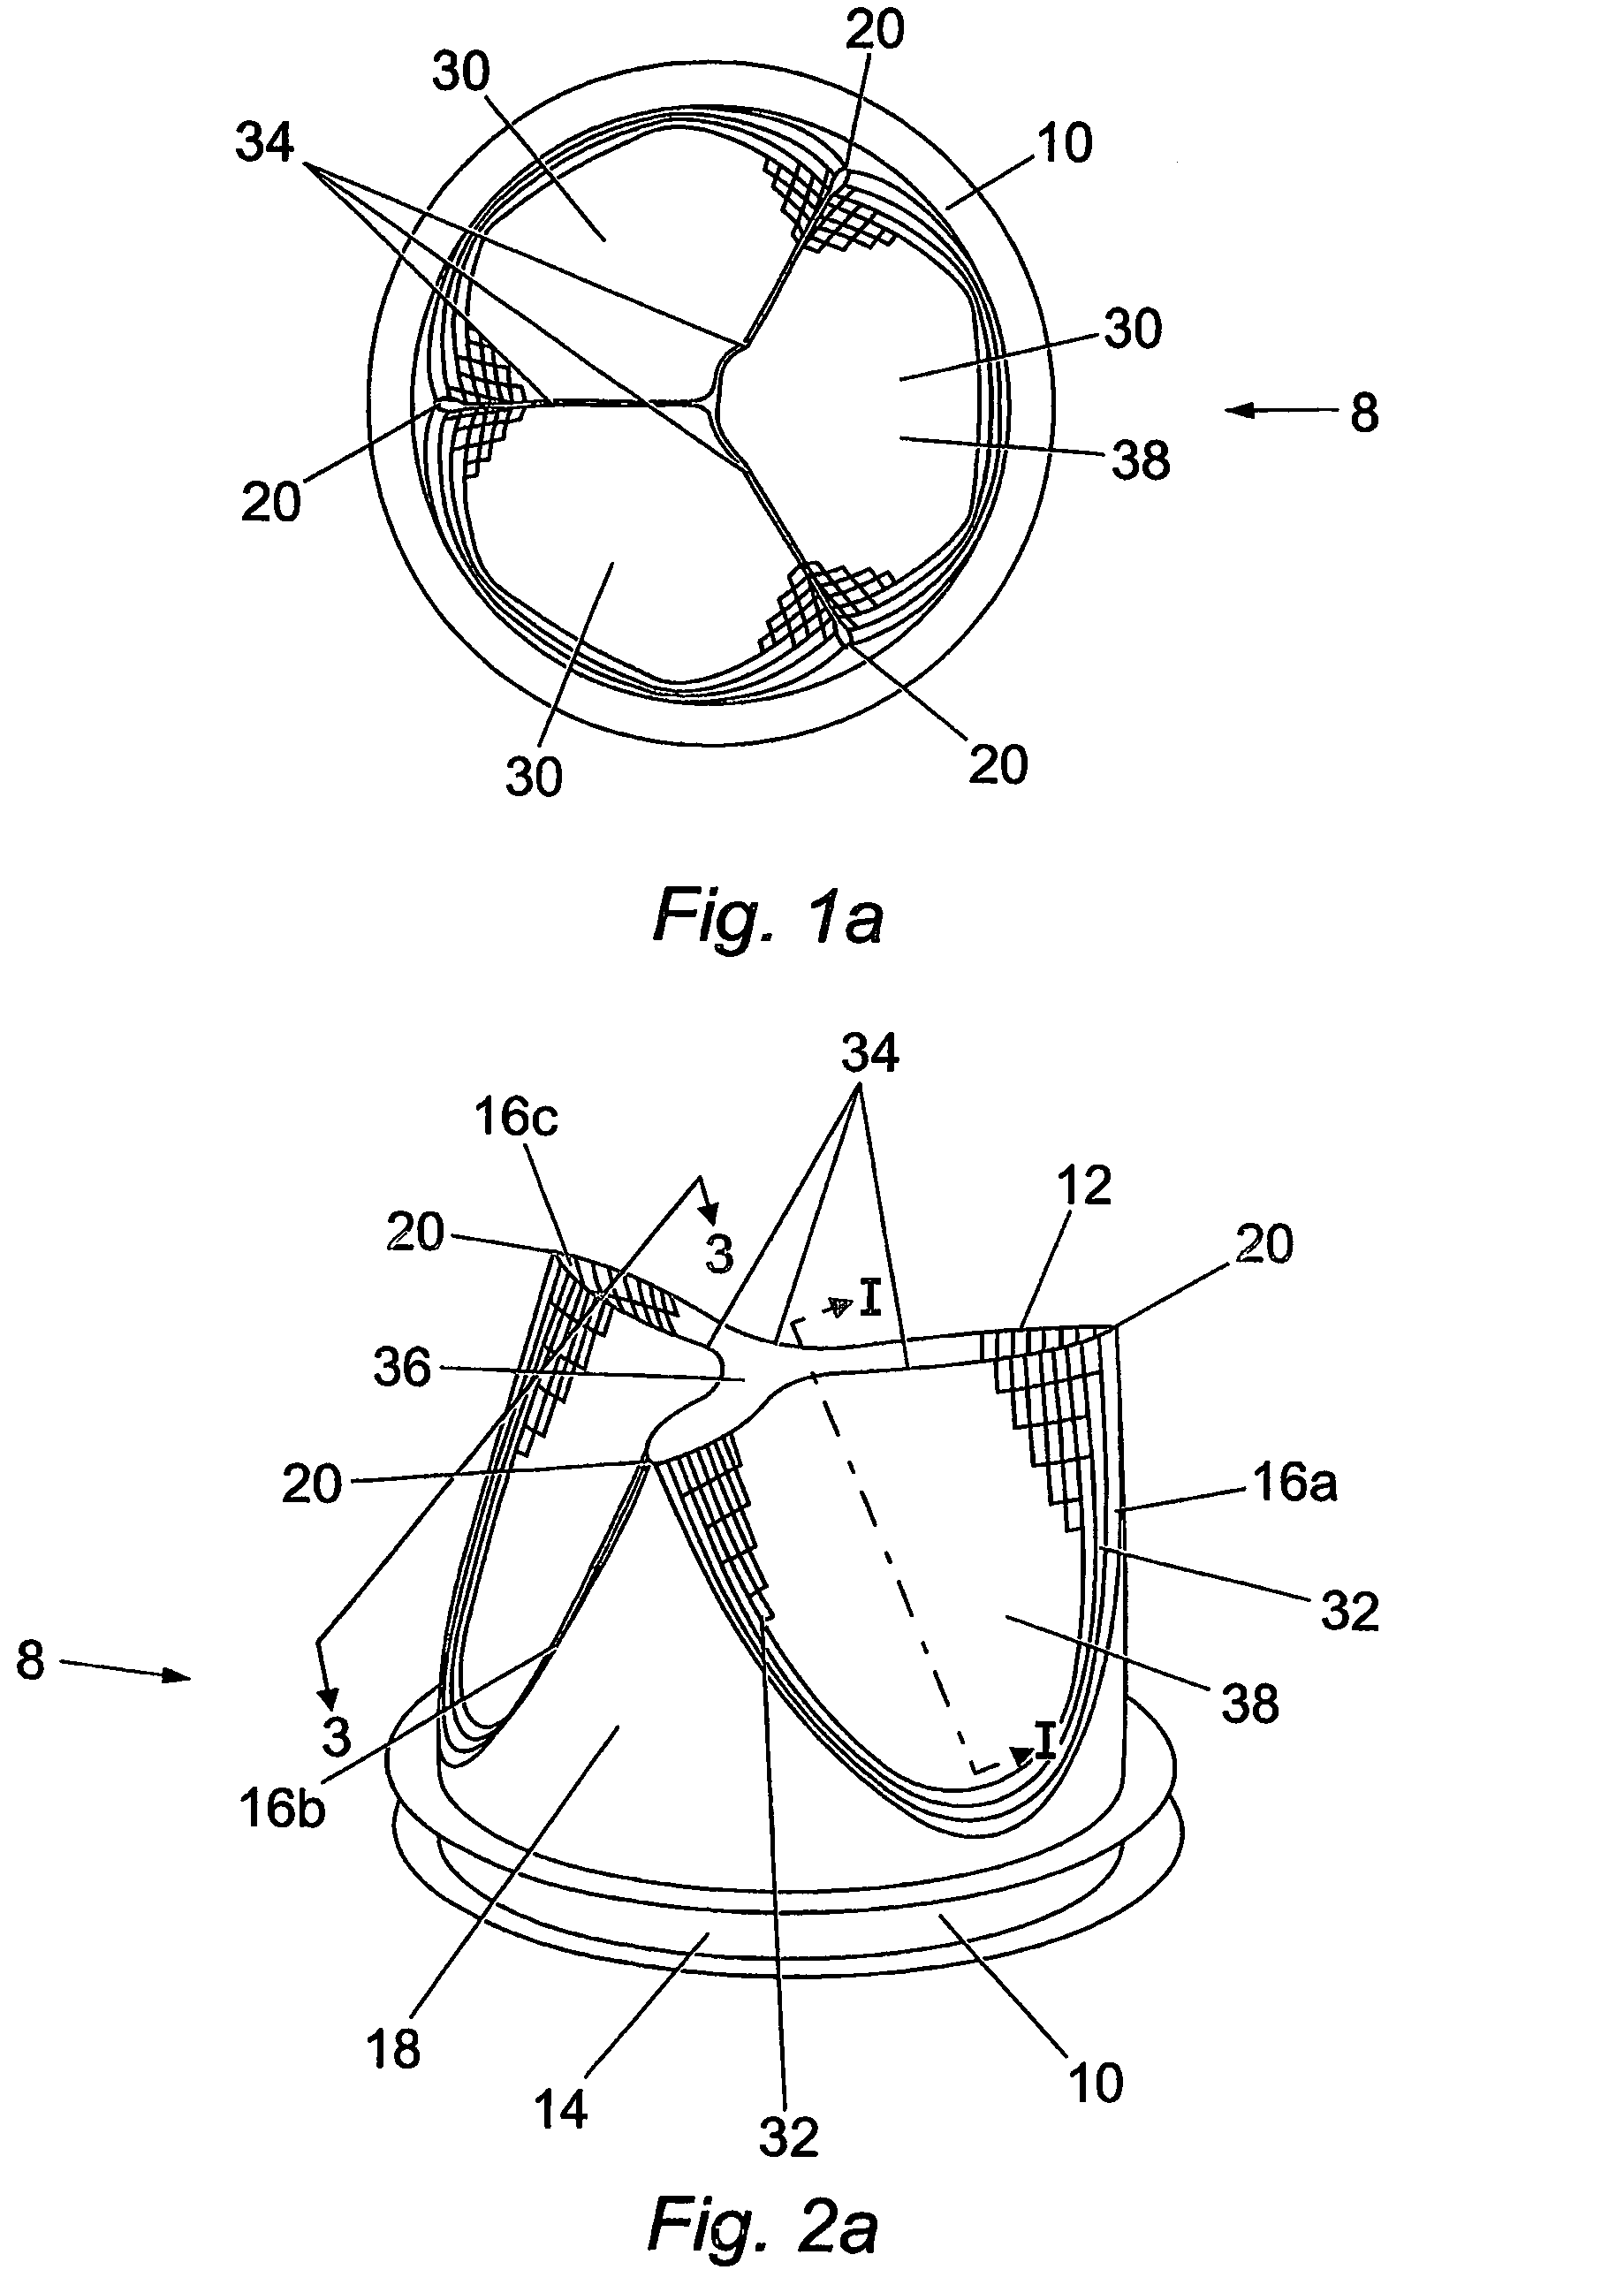 Cardiac valve featuring a parabolic function